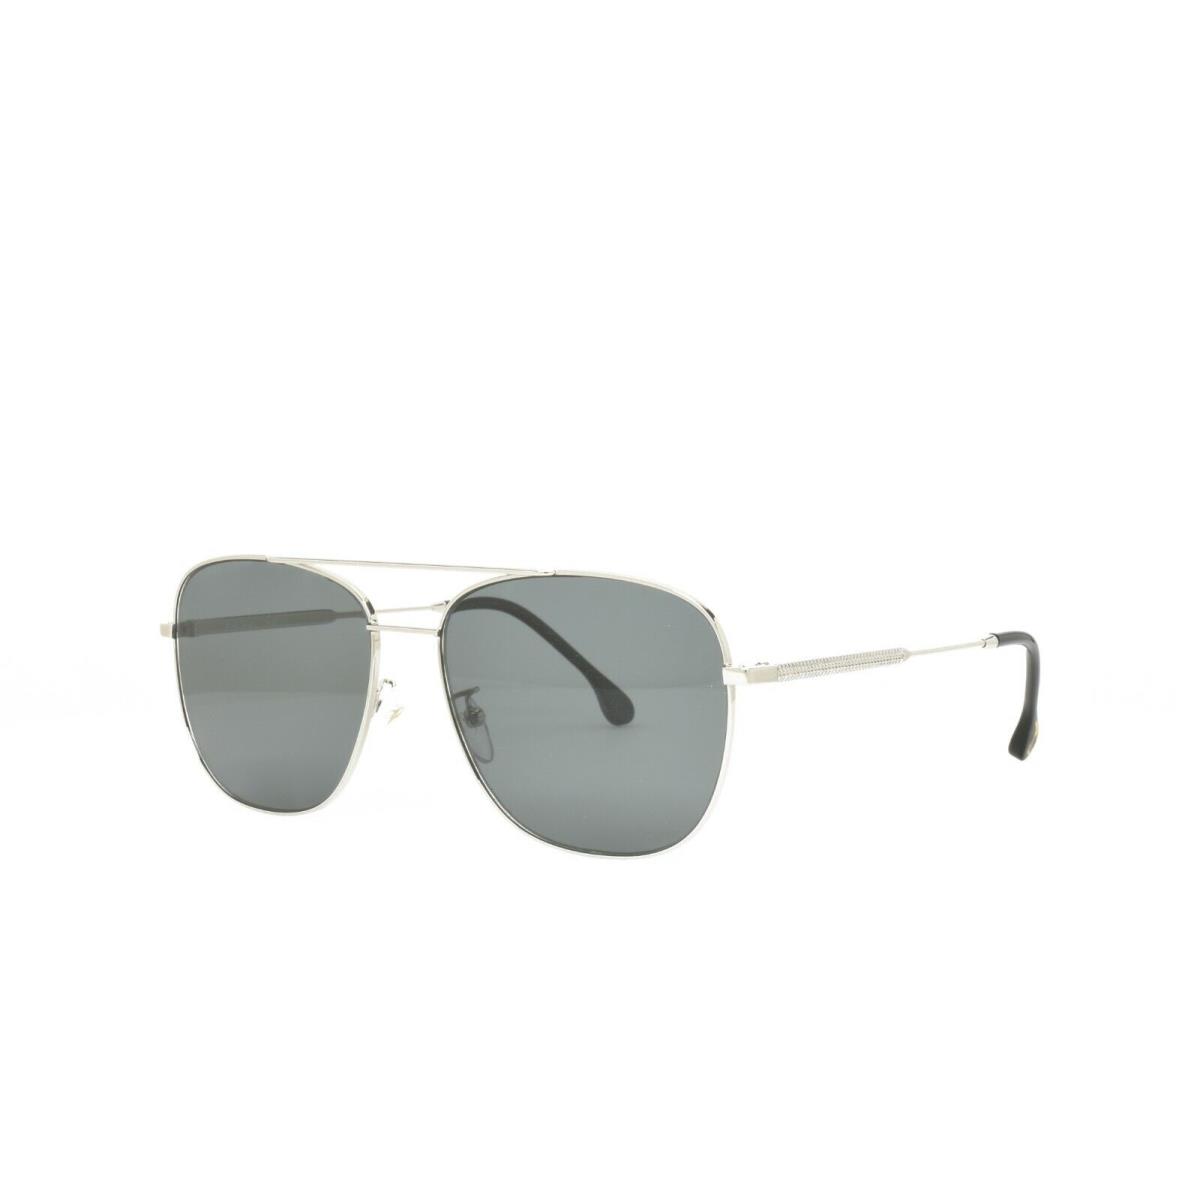 Paul Smith Avery V2 Sunglasses PSSN007V2 C01 58-15-145 Silver